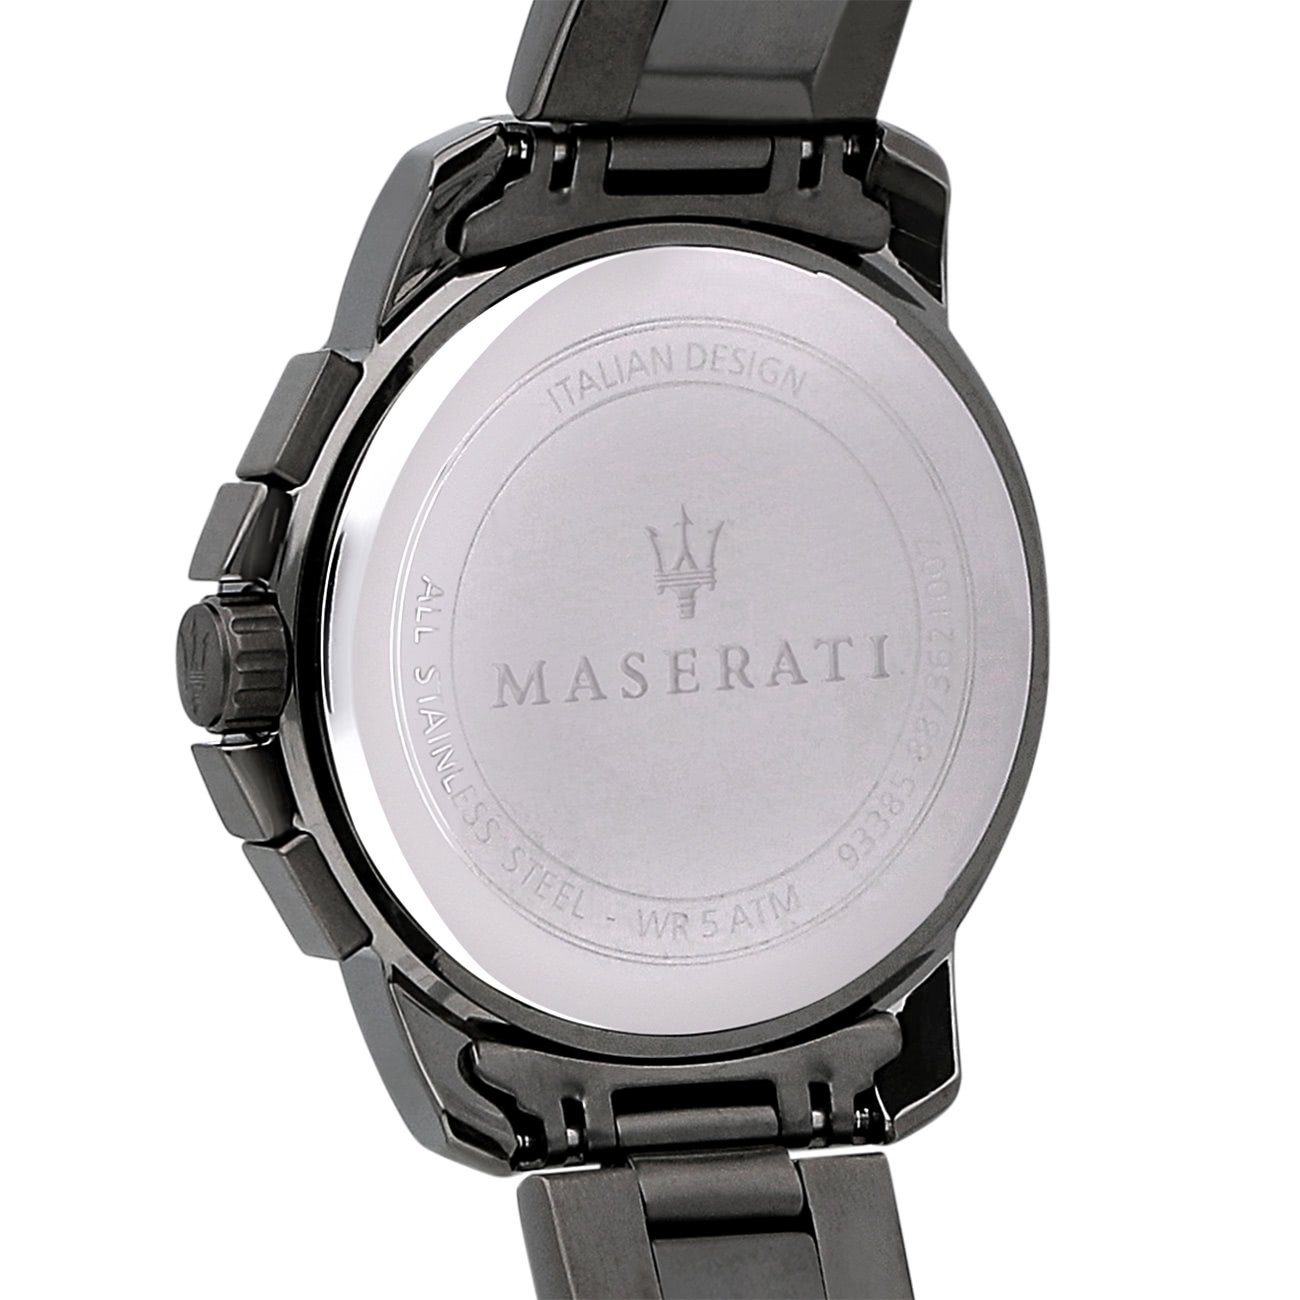 Italy Chronograph, rund, groß Chronograph Made-In Herrenuhr Herren Edelstahlarmband, 52x44mm) grau Uhr (ca. Maserati MASERATI